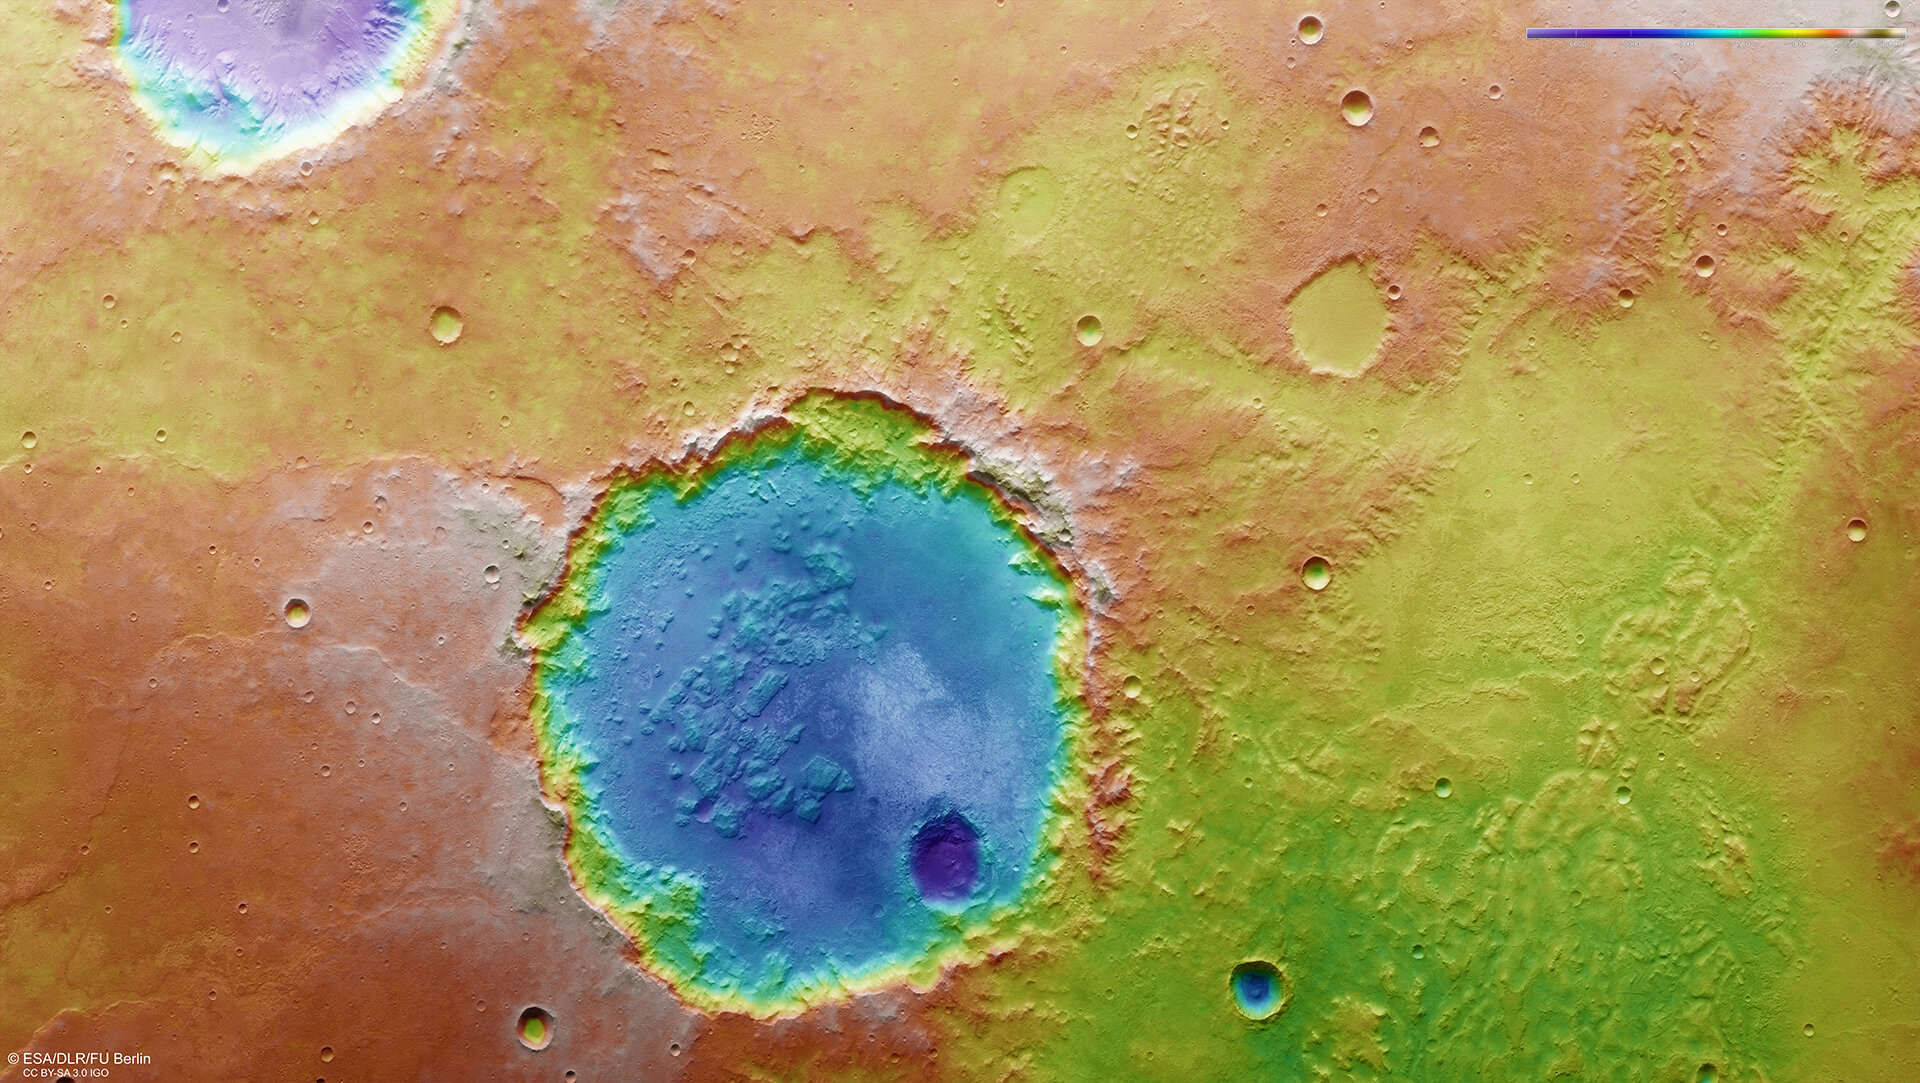 Future Mars Exploration Day on 5 July at ESTEC